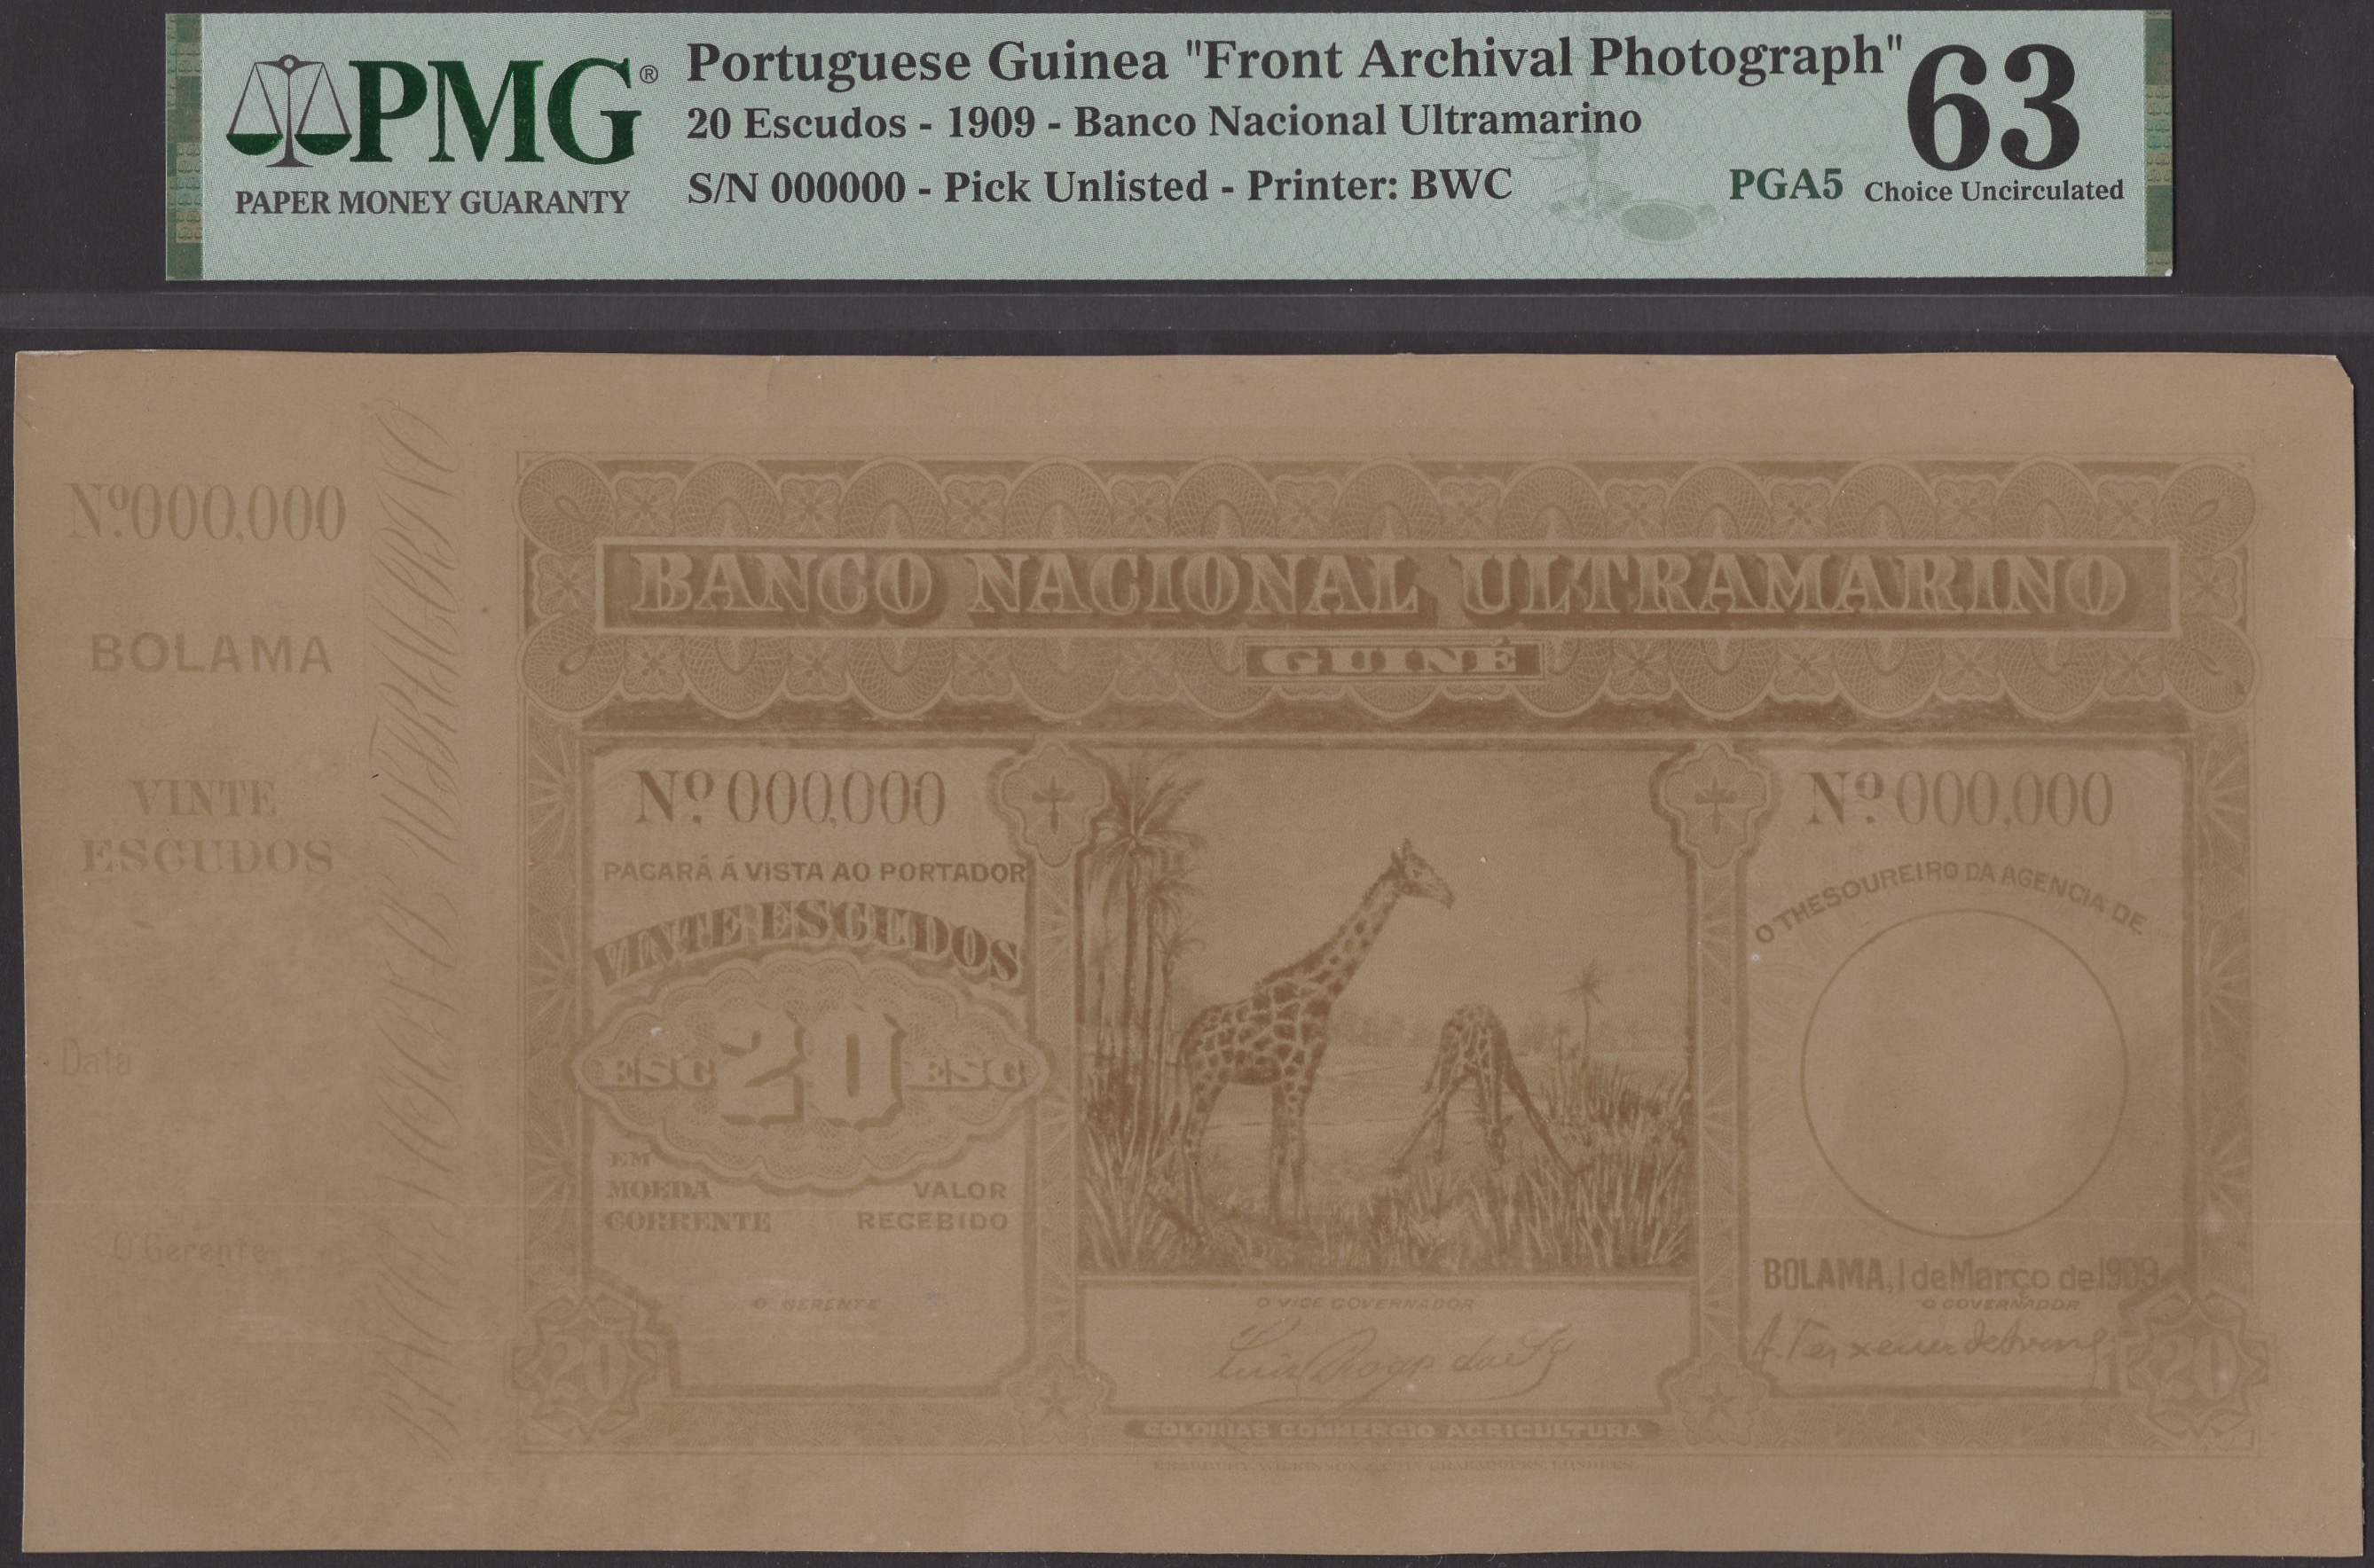 Banco Nacional Ultramarino, Portuguese Guinea, obverse and reverse sepia photographs...